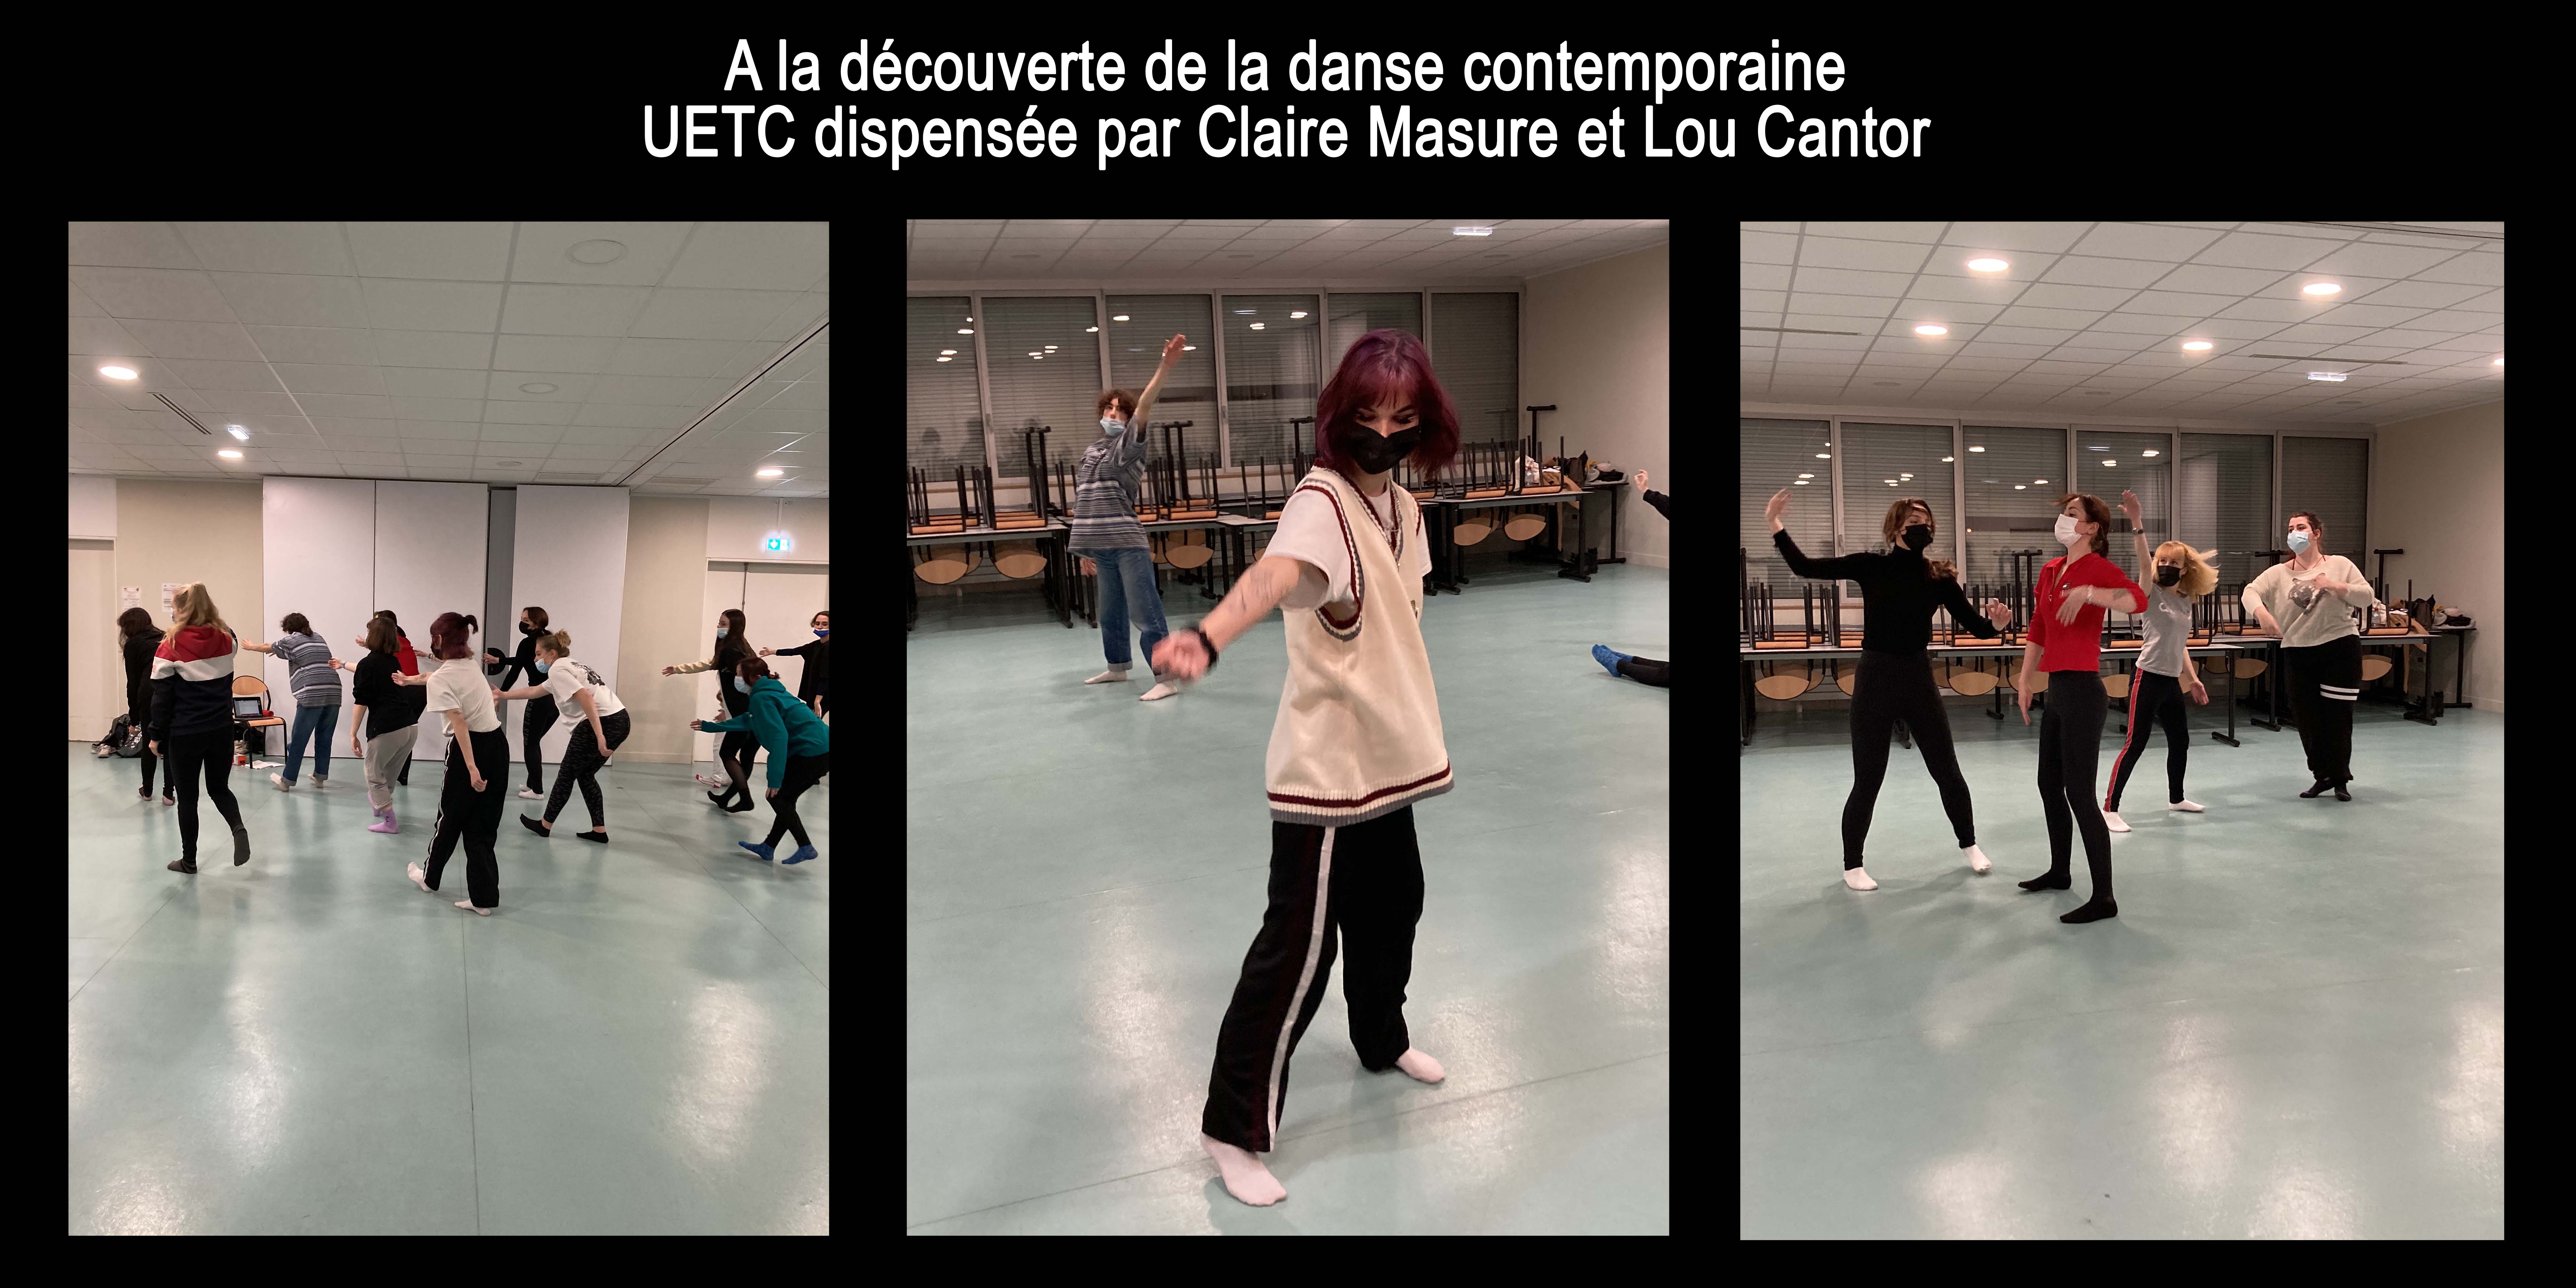 danse contemporaine (jpg, 700ko)